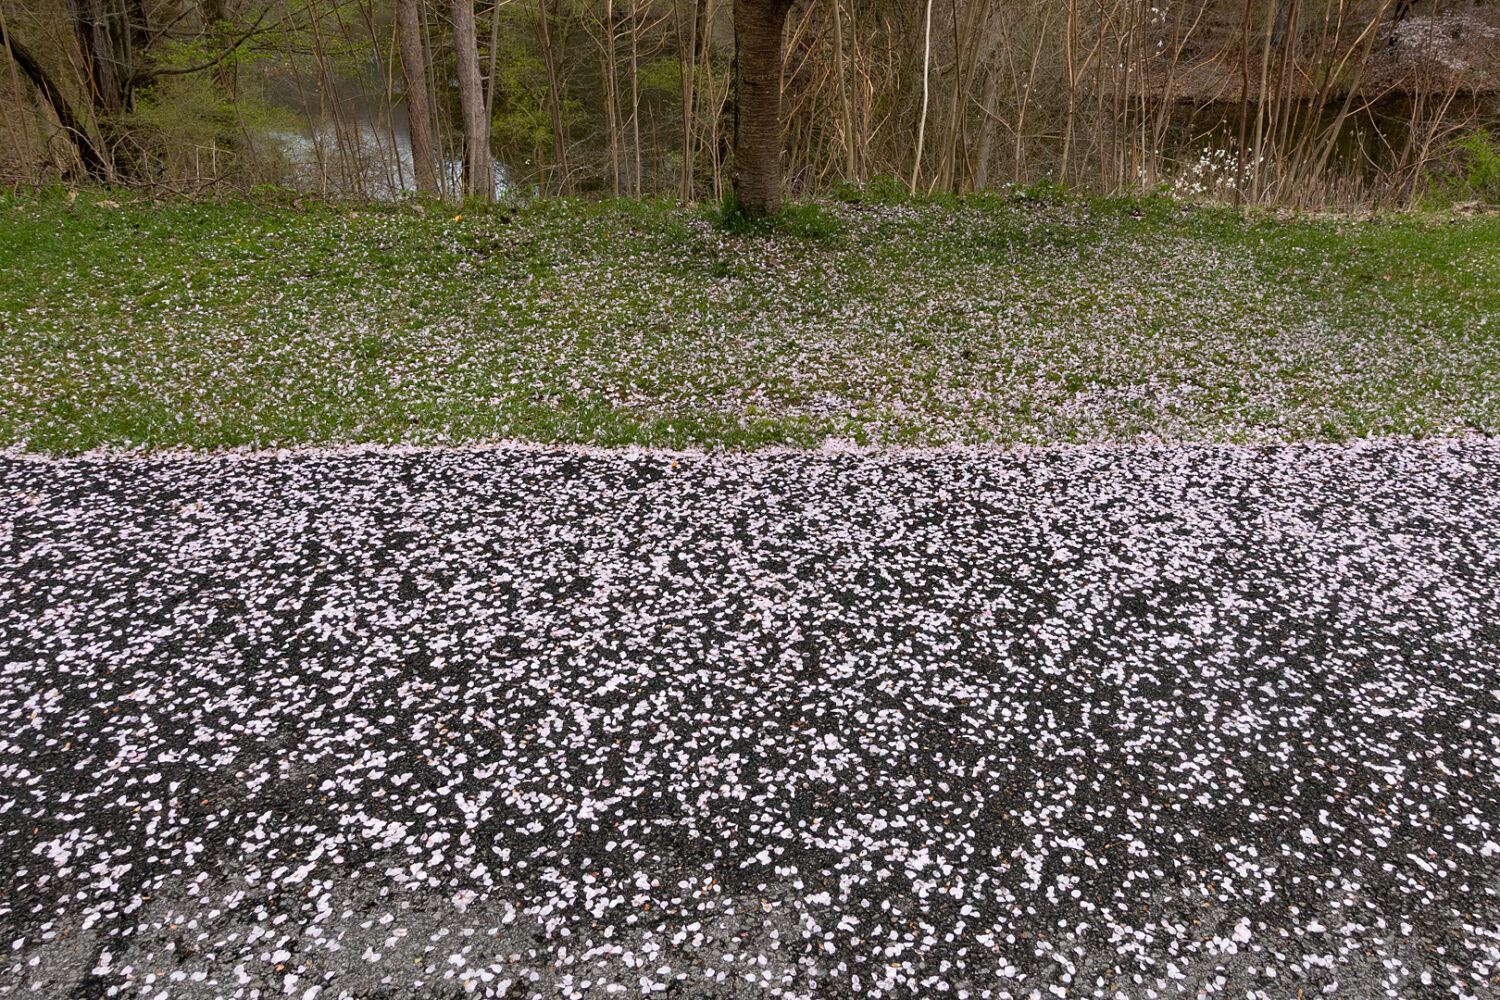 Cherry blossom petals on pavement